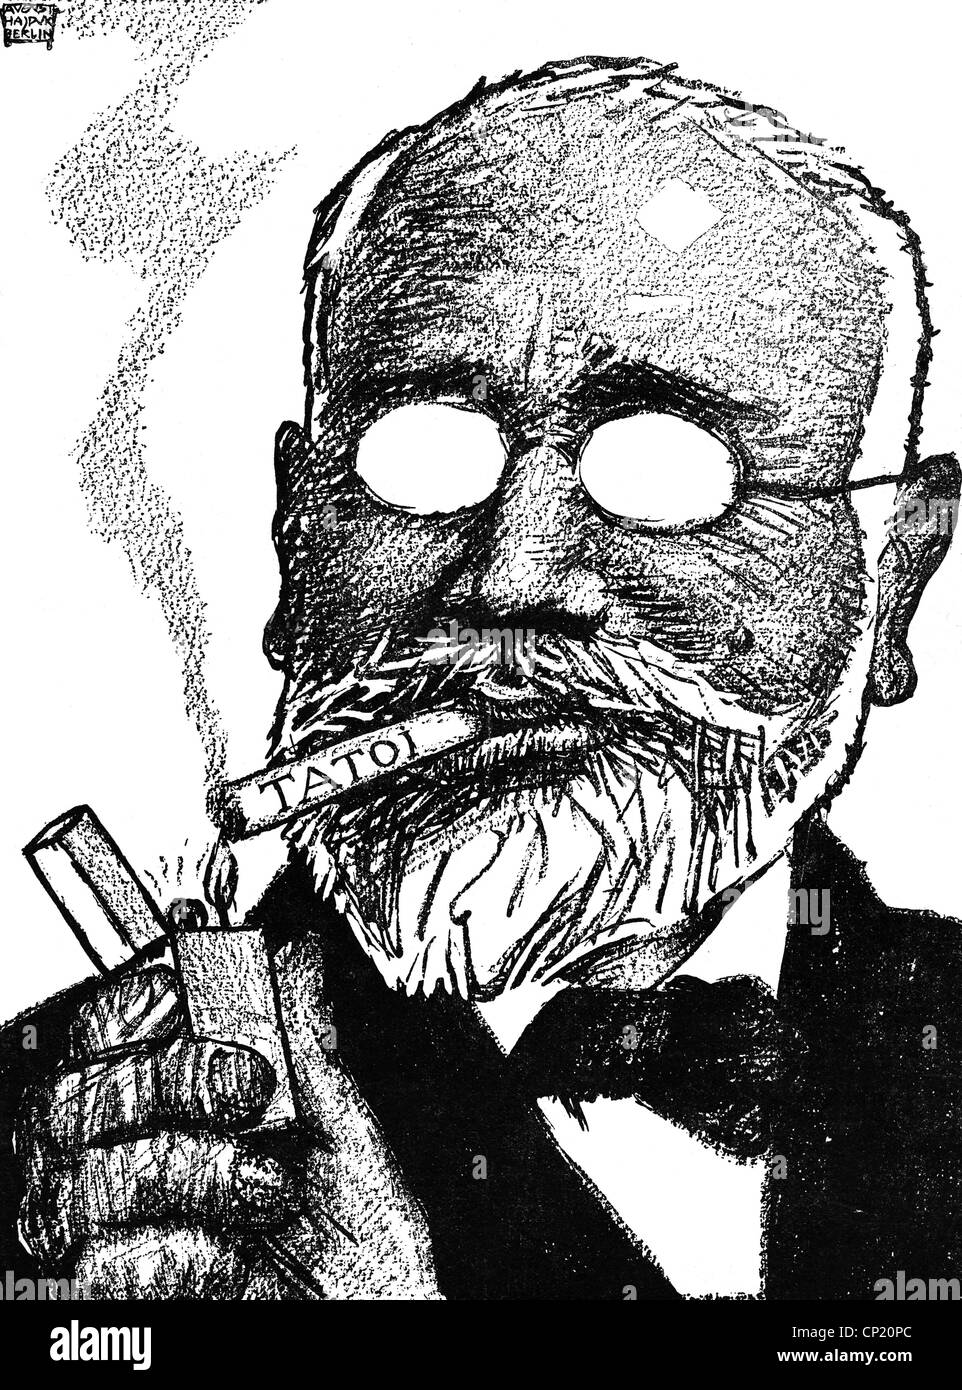 Venizelos, Eleftherios, 23.8.1864 - 18.3.1936, Greek politician, Prime Minister 10.10.1910 - 10.3.1915, caricature, 'My favorite Cigarette', drawing by August Hajduk, 'Ulk', Berlin, circa 1912, Stock Photo